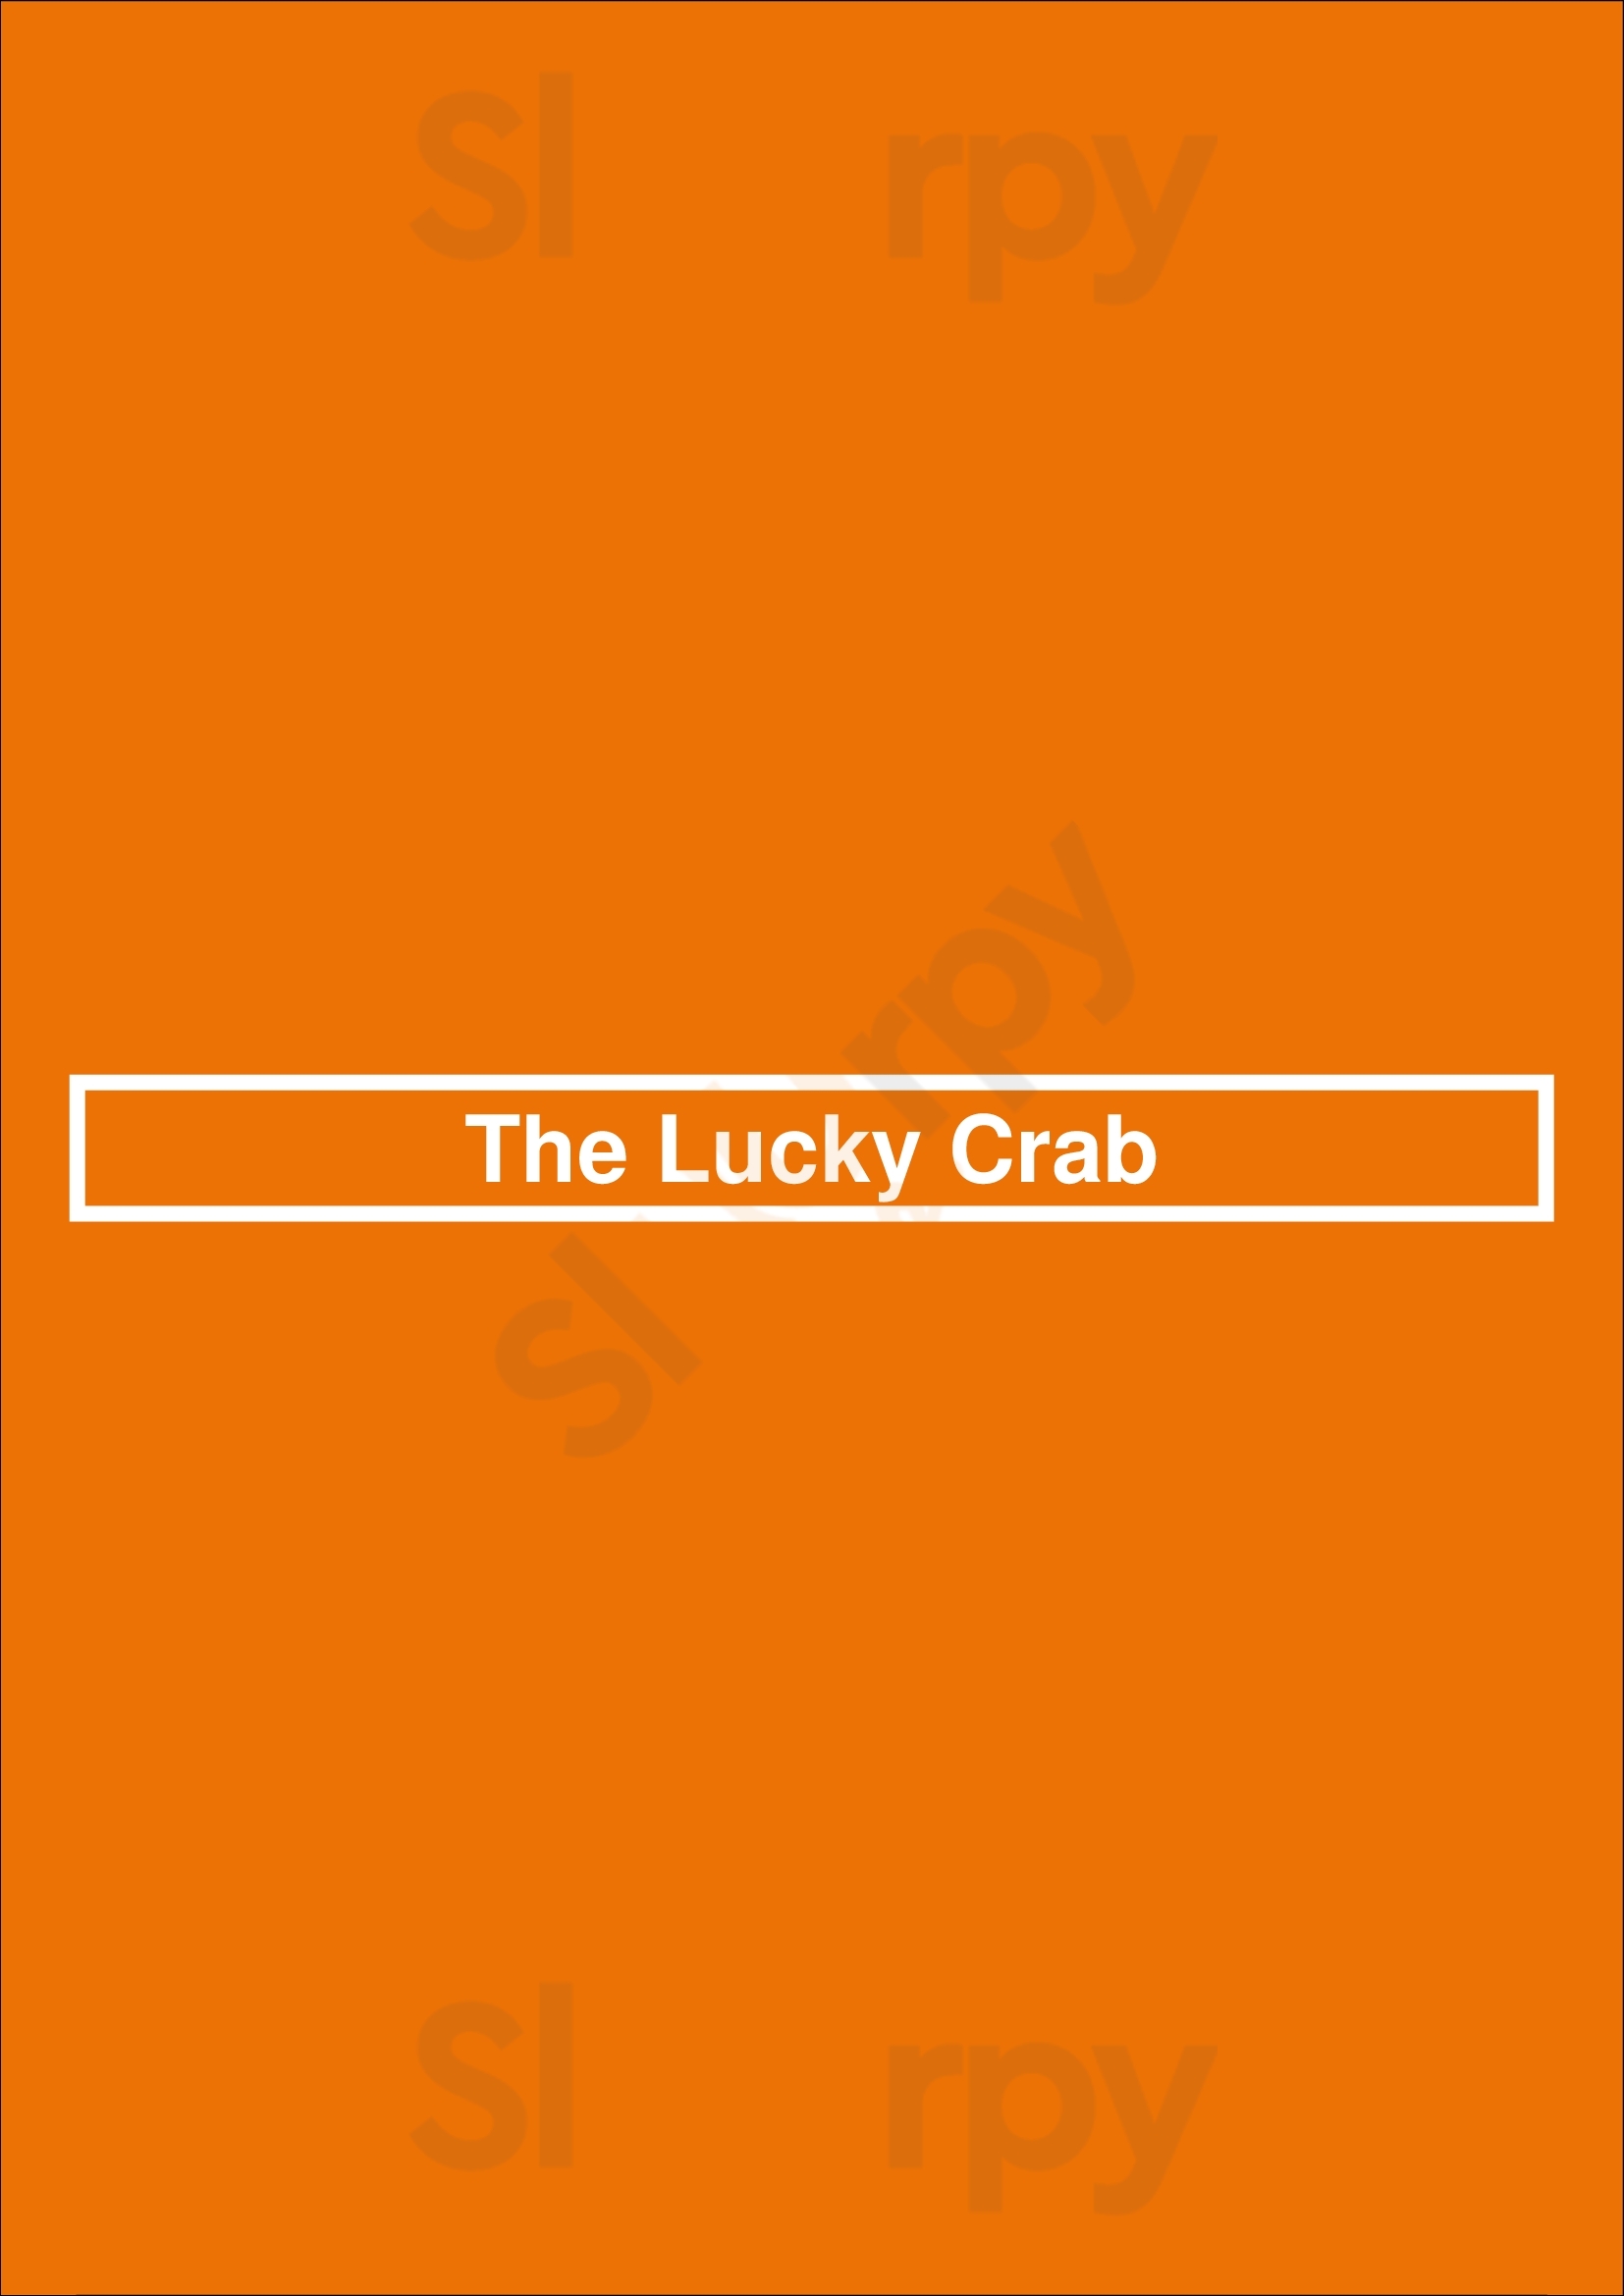 The Lucky Crab Greenwood Menu - 1